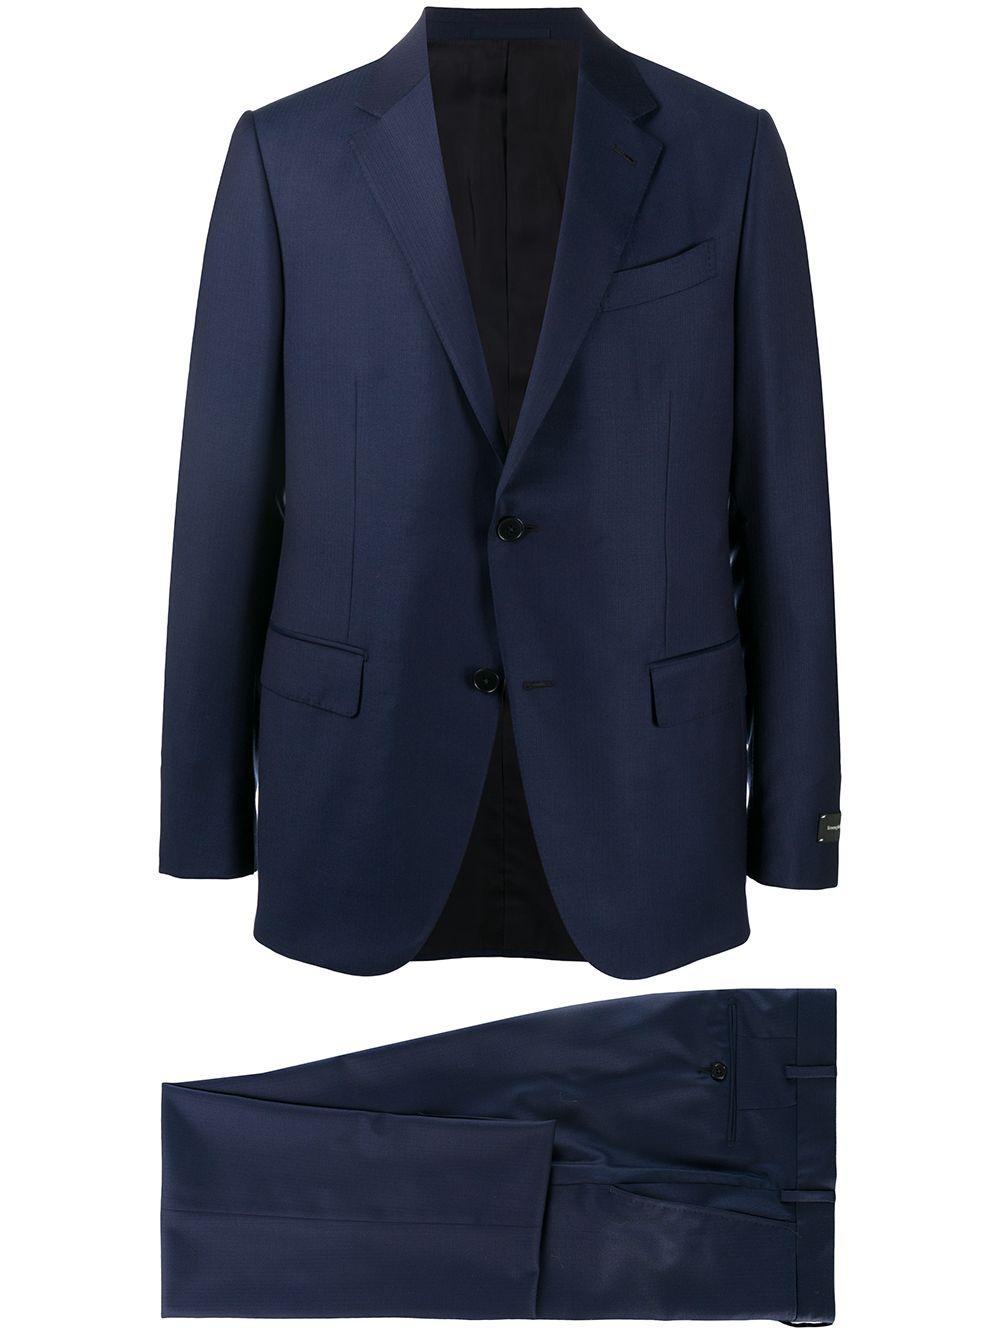 Ermenegildo Zegna Pinstripe Two-piece Wool Suit in Blue for Men - Lyst